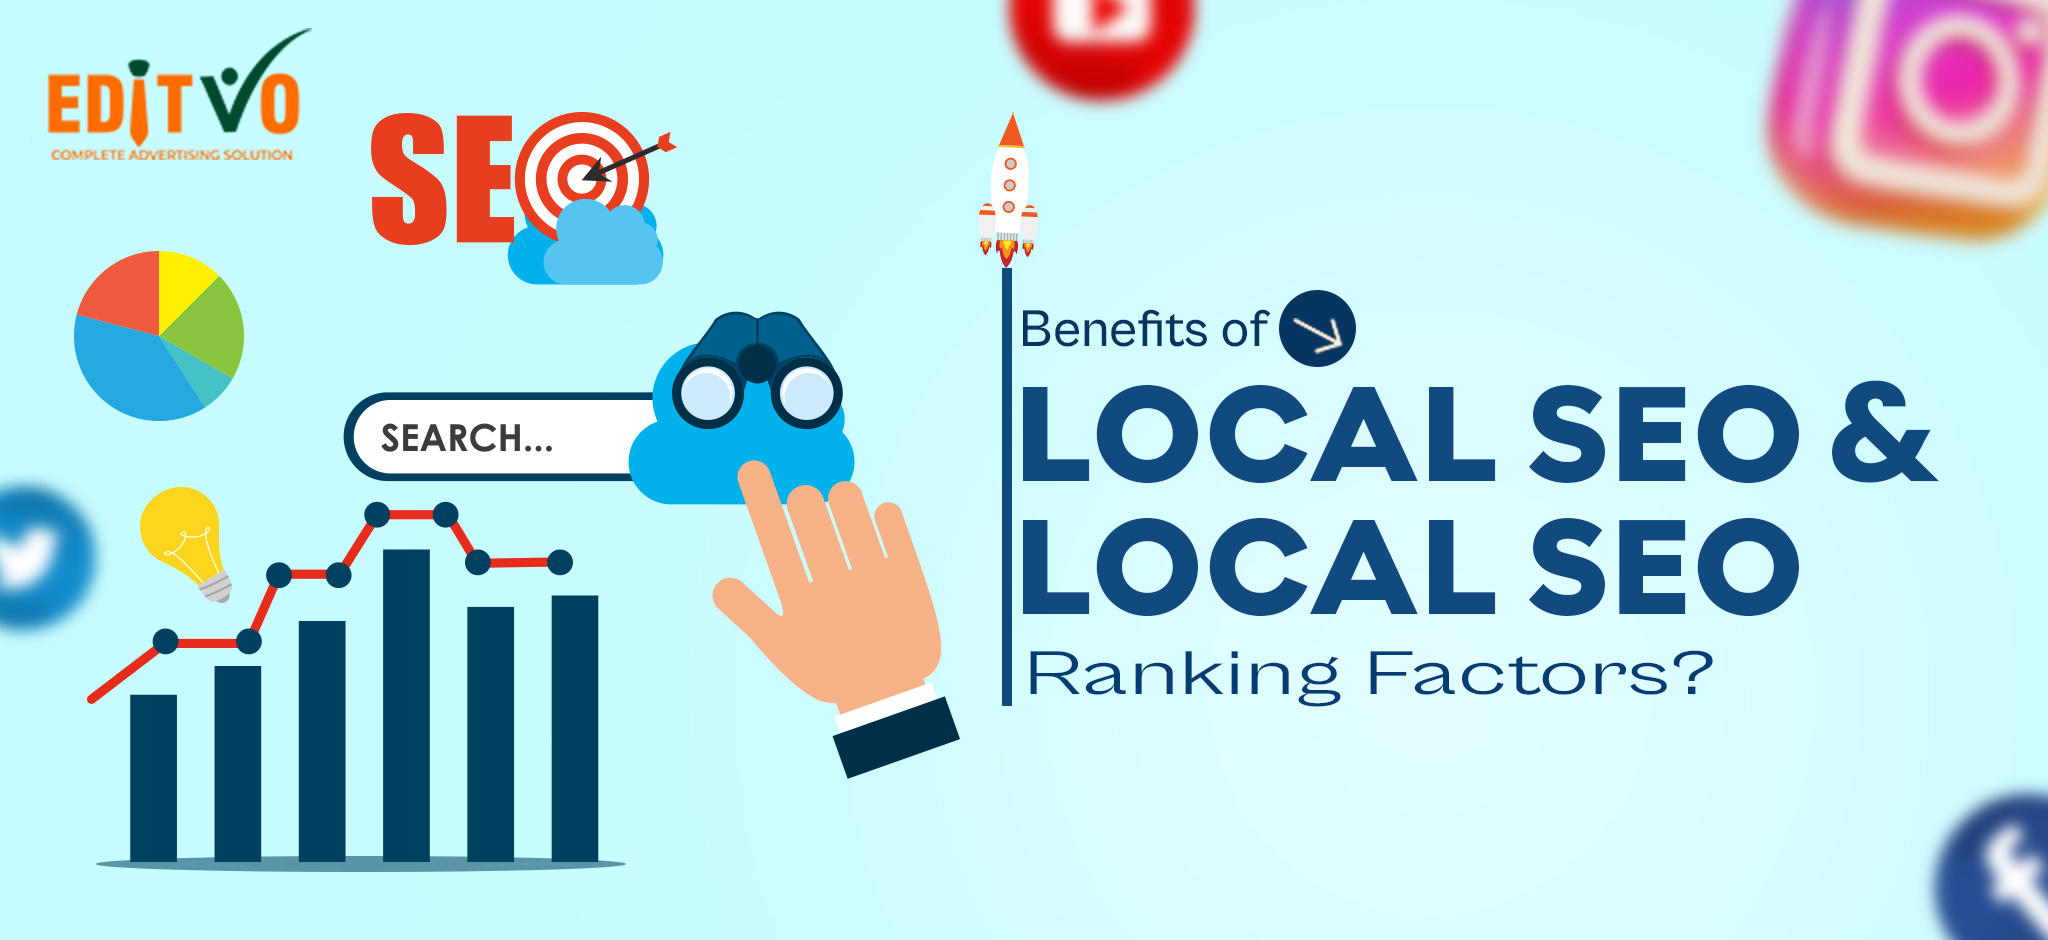 Benefits of Local SEO & Local SEO Ranking Factors?